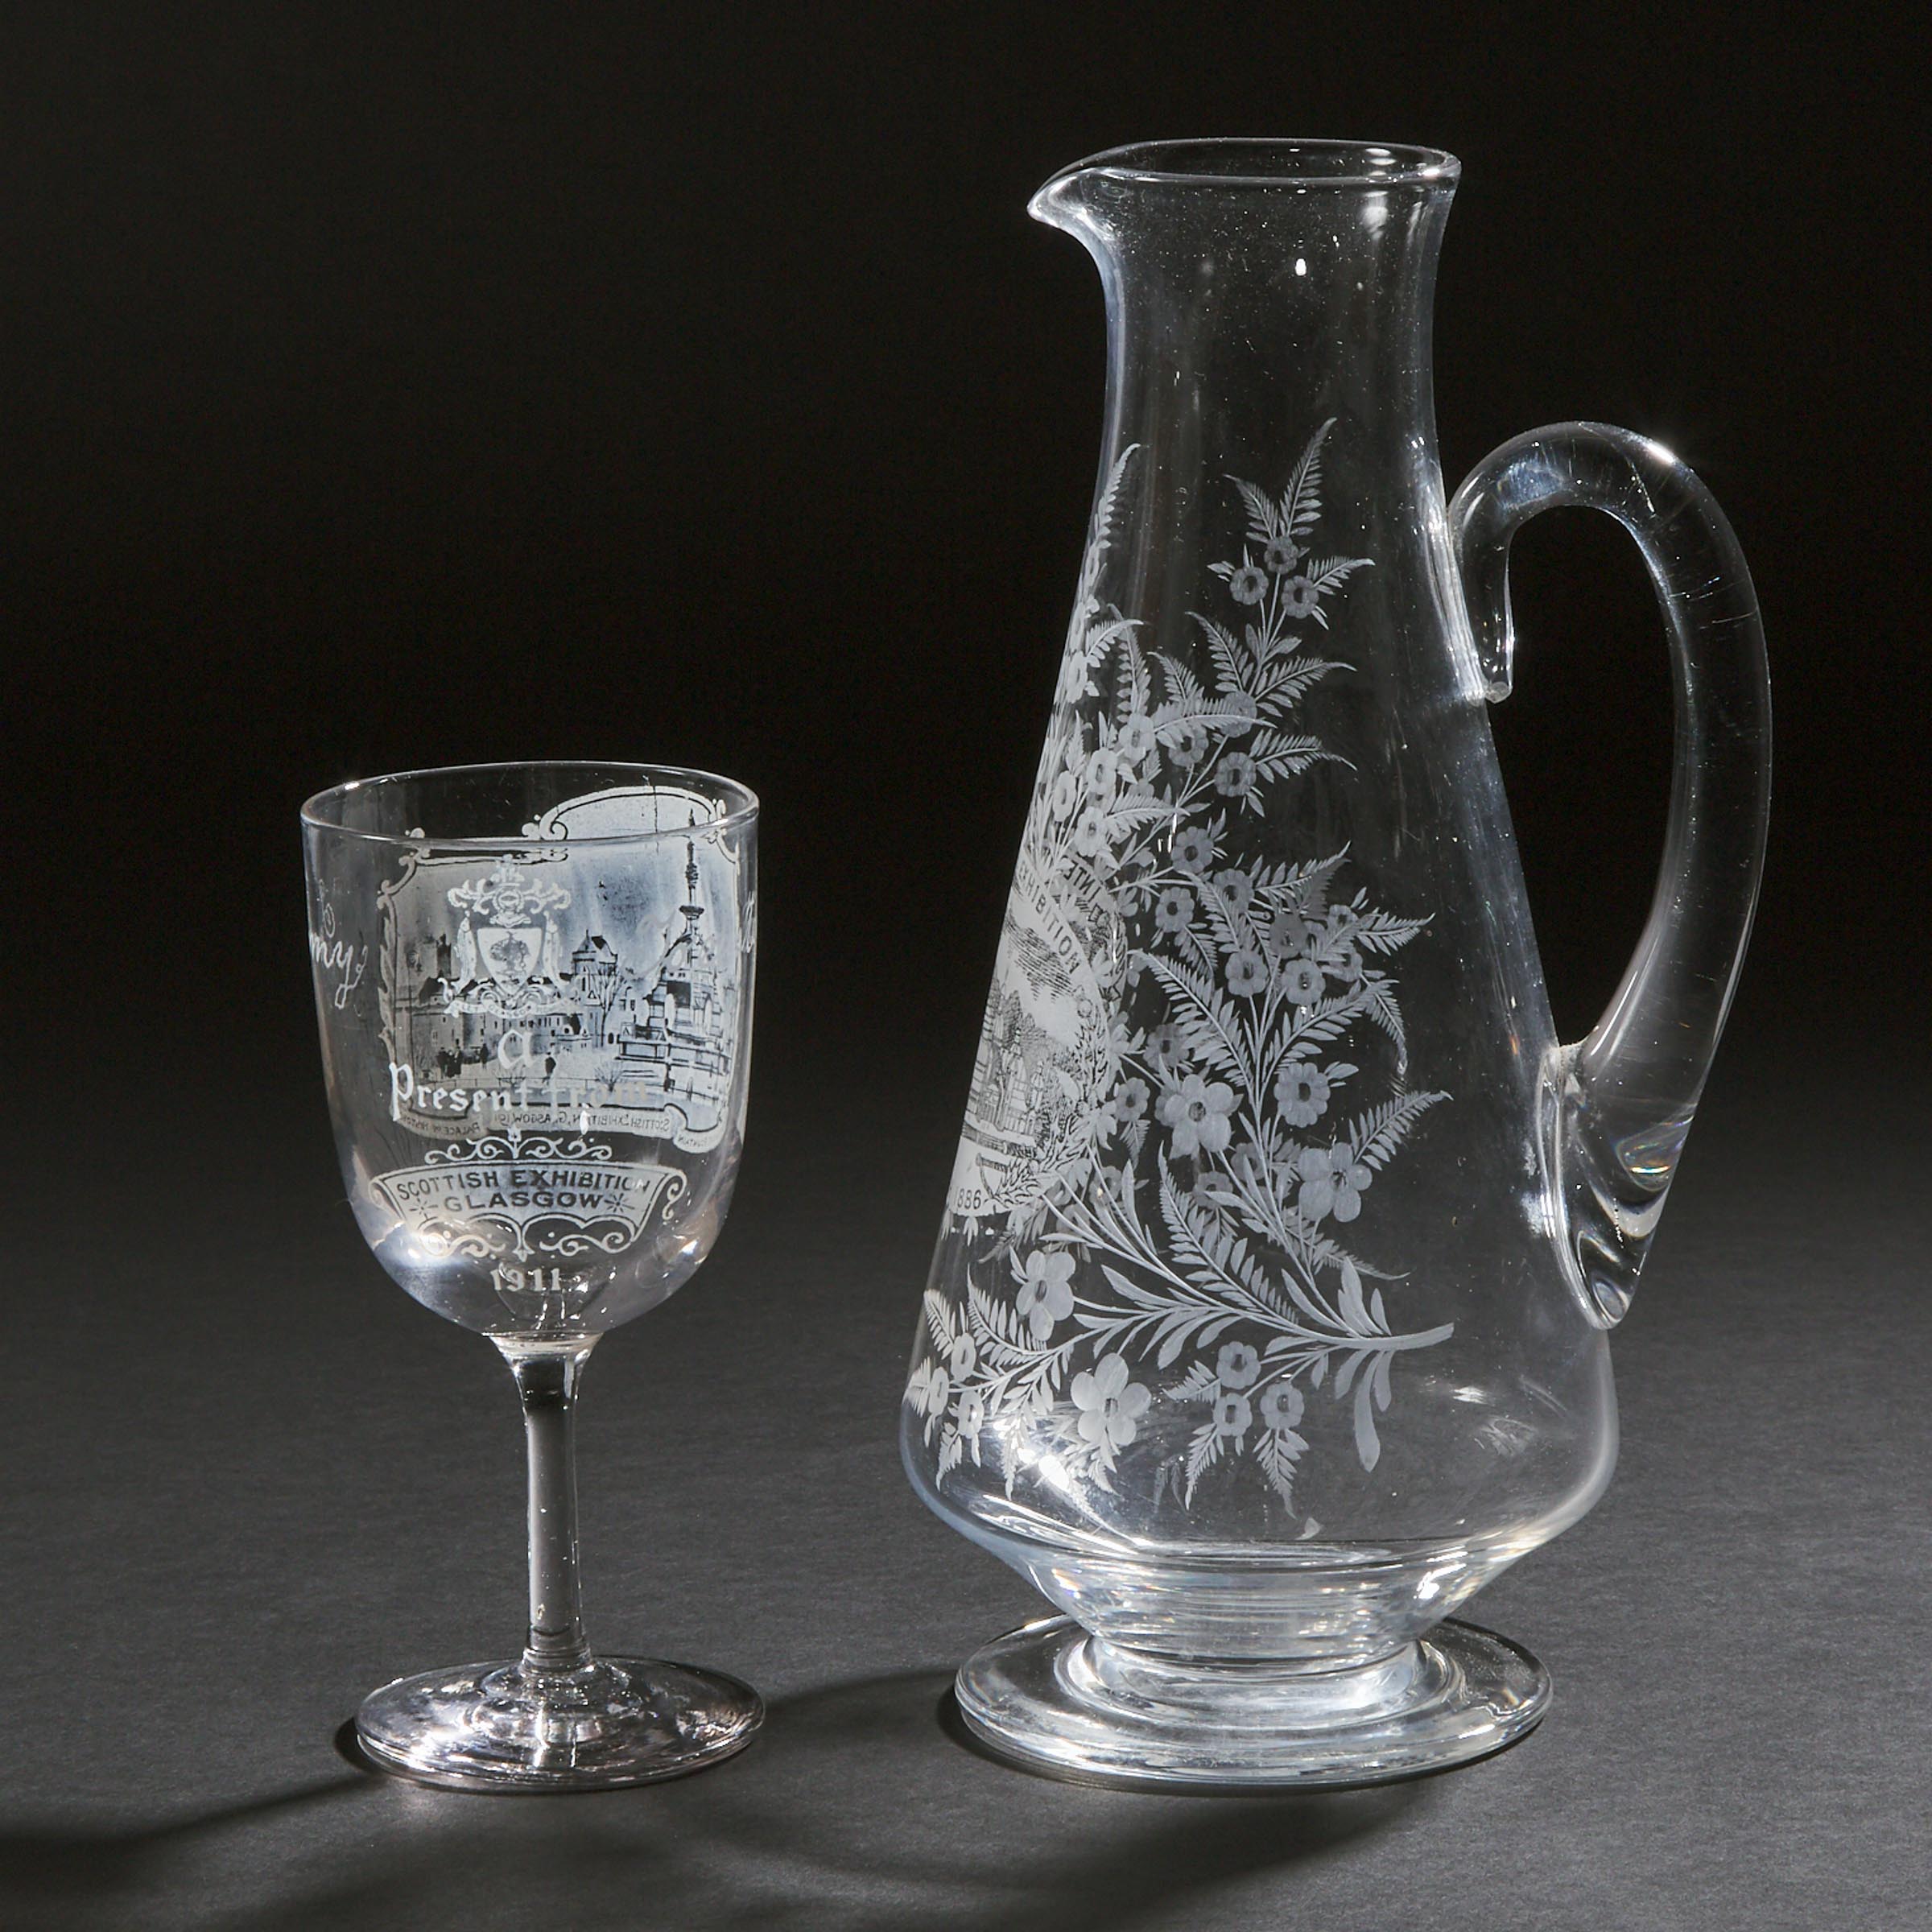 Scottish Etched Glass Jug, 'International Exhibition, Edinburgh 1886' and a Goblet, 'Scottish Exhibition, Glasgow 1911'